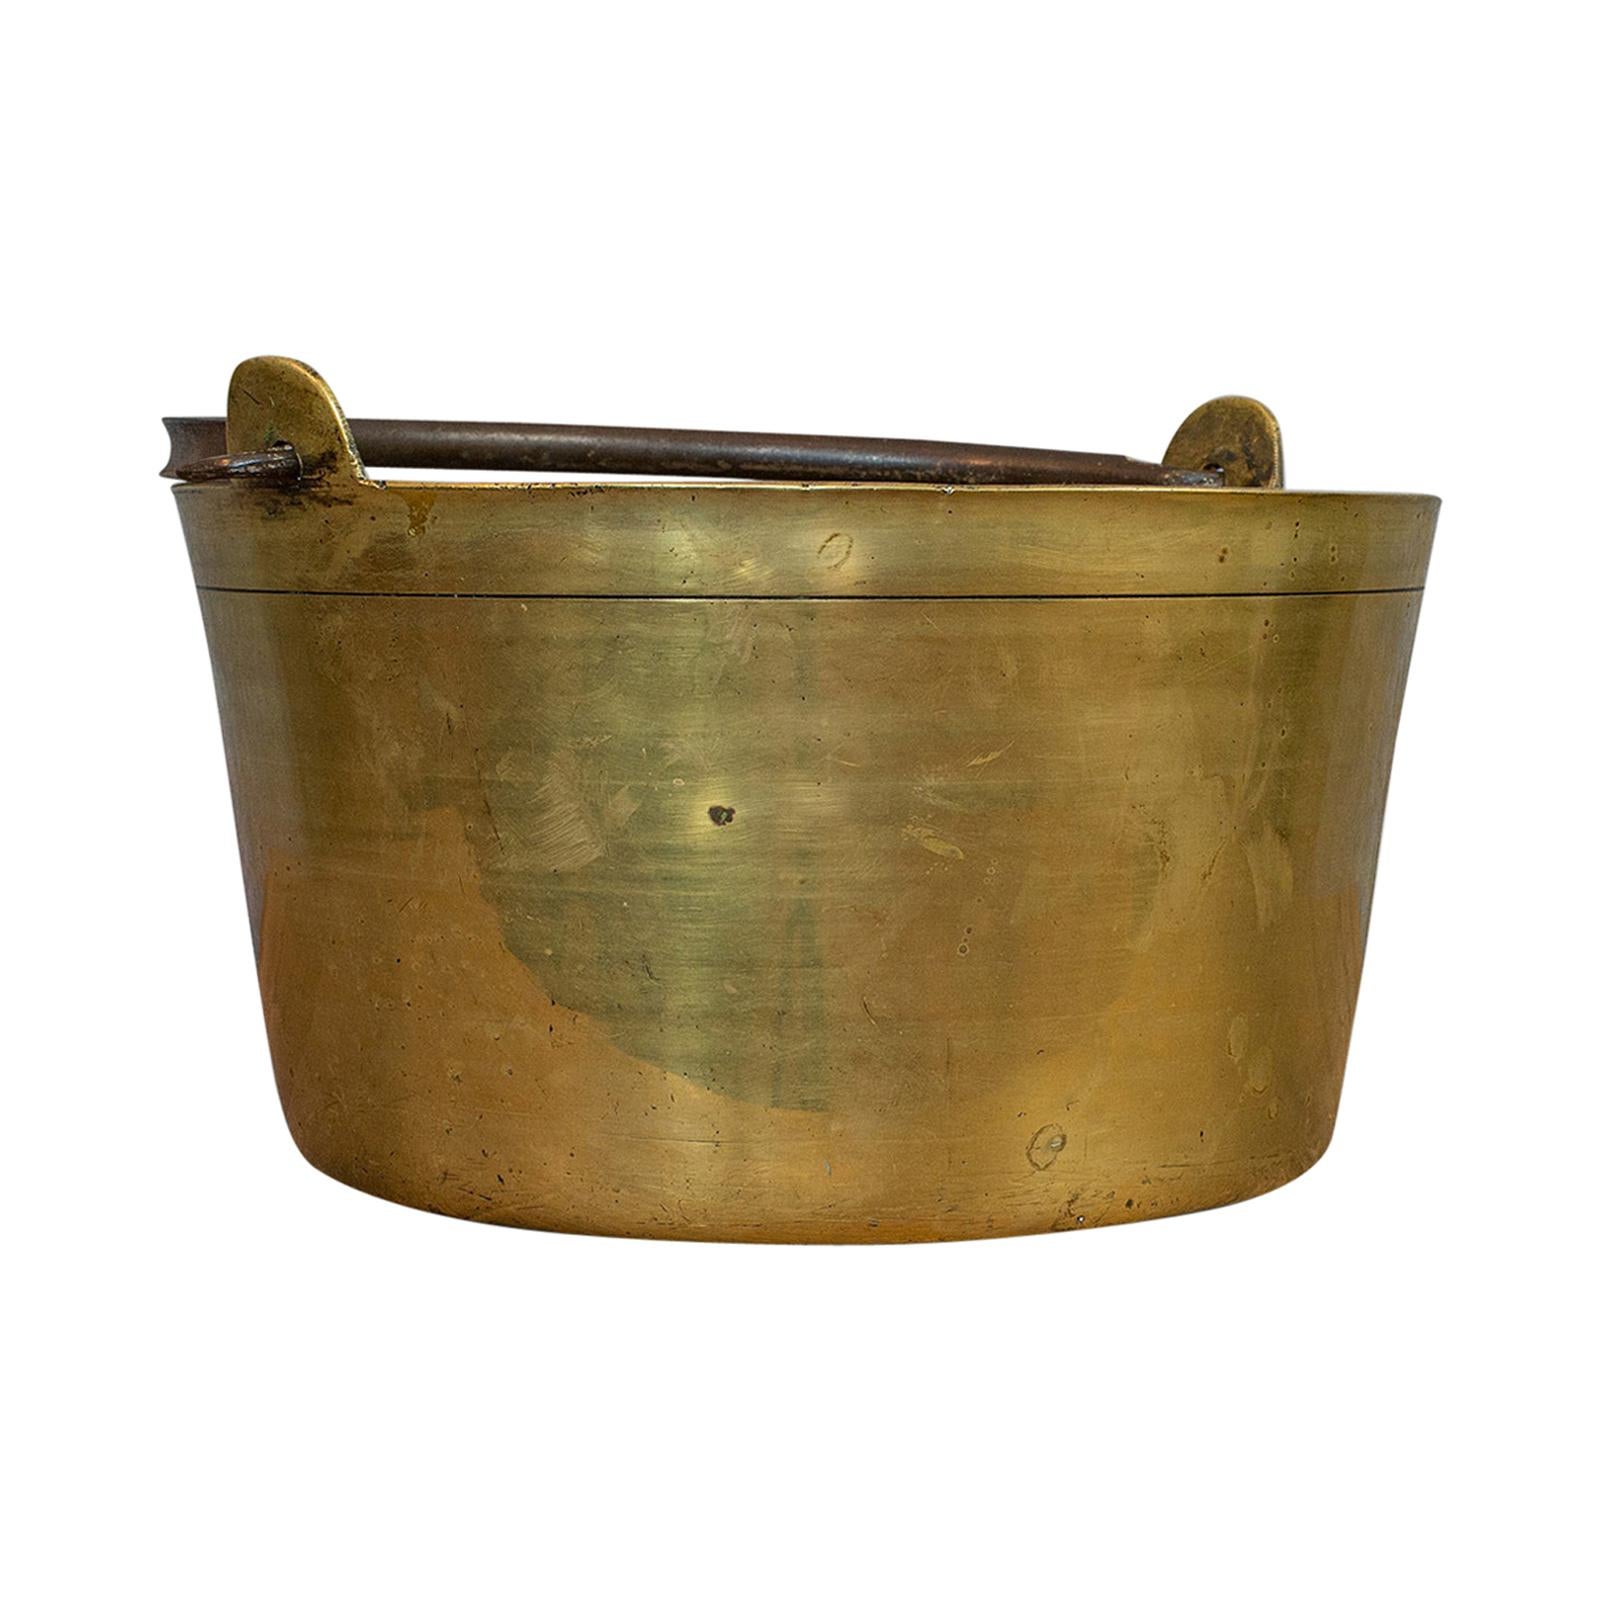 Antique Jam Pan, French, Solid Brass, Artisan Kitchen Pot, Victorian, circa 1900